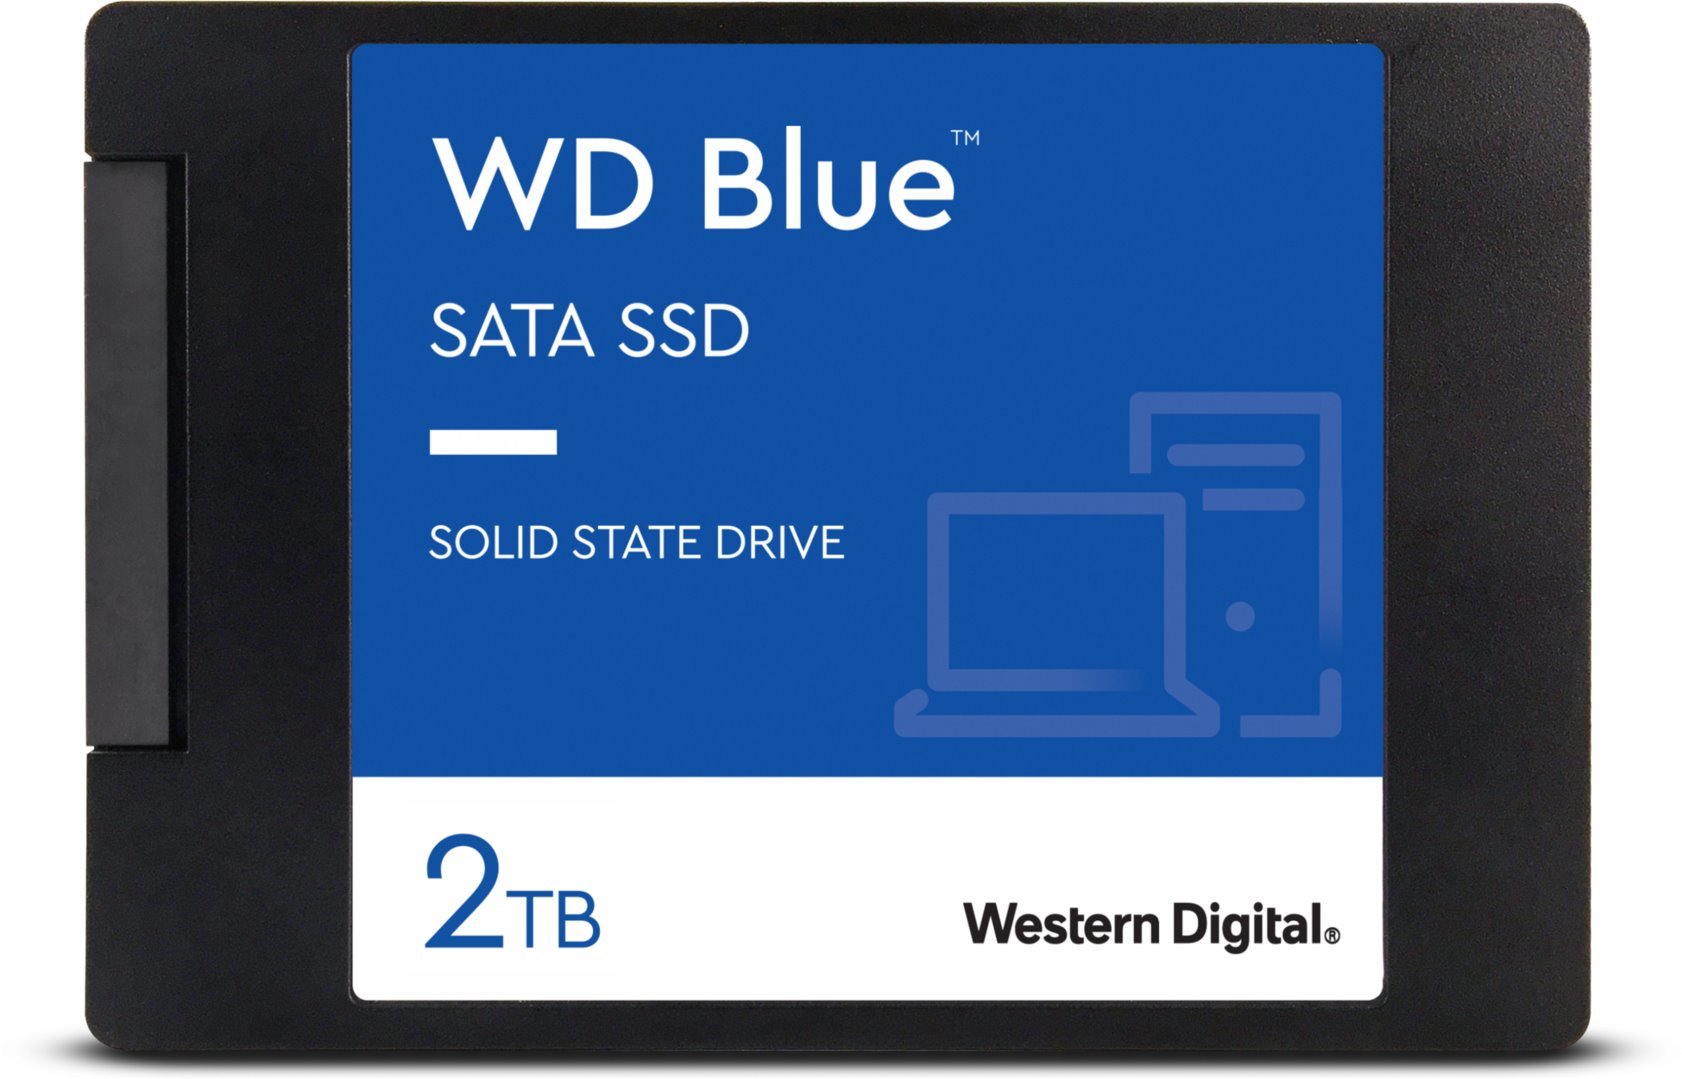 WD Blue SA510 2TB